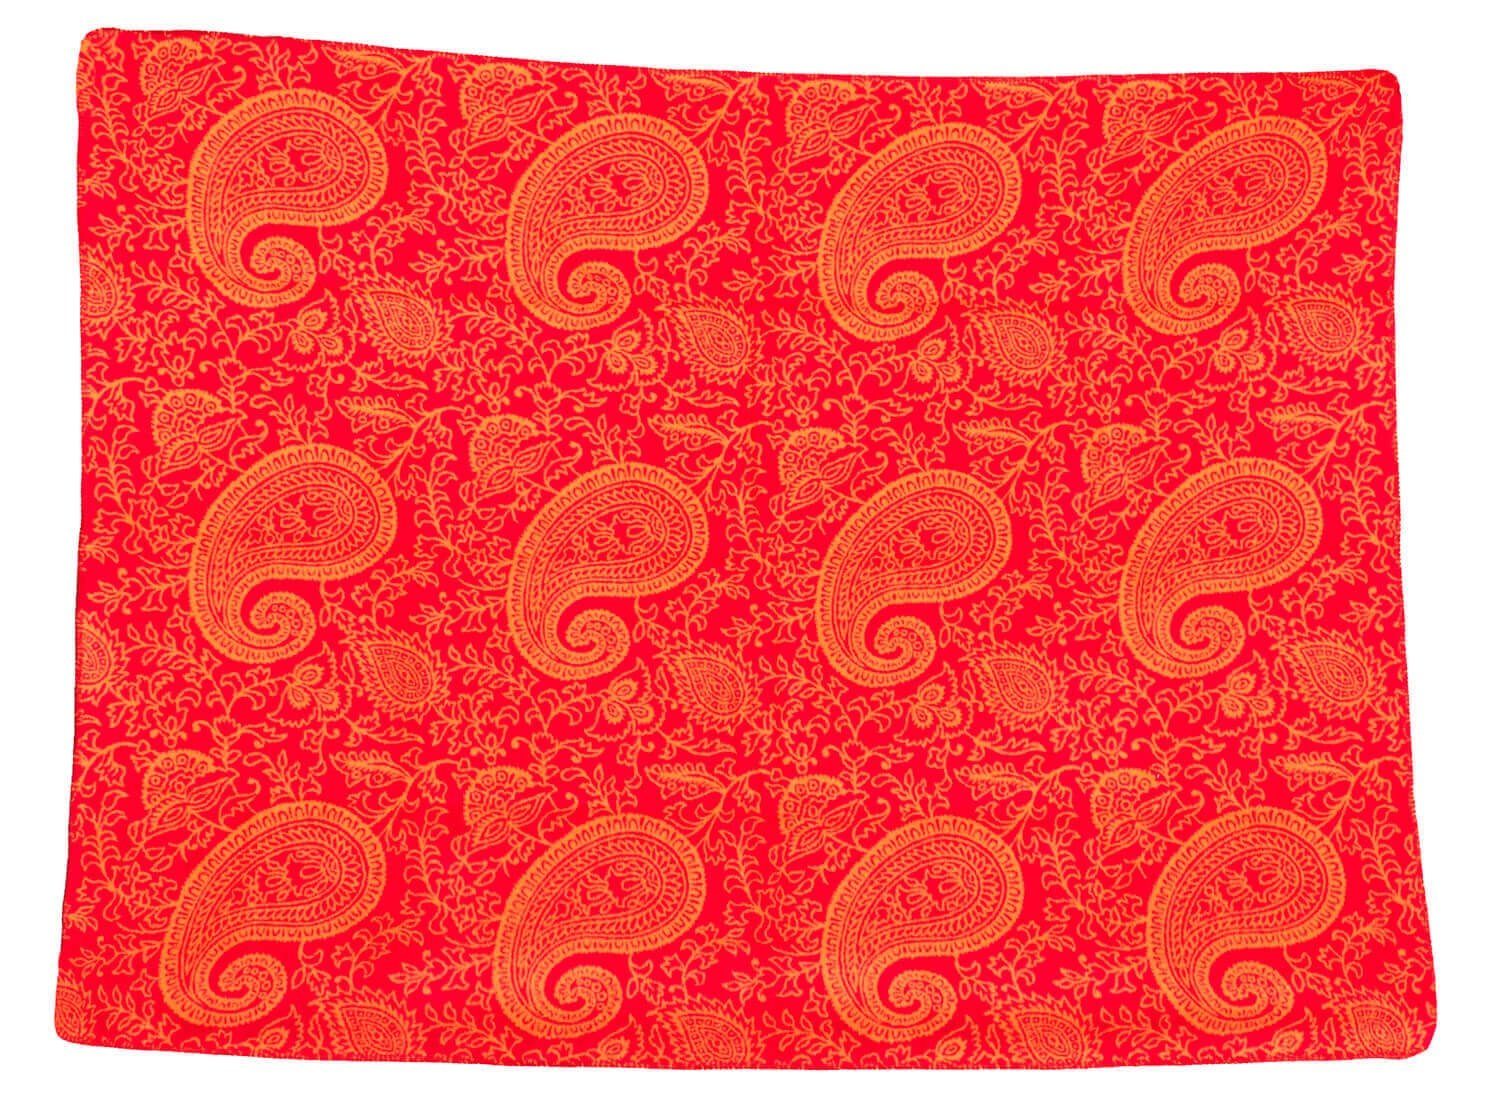 Wolldecke PAISLEY 150 x 200 orange regional rot - yogabox hergestellt, cm 